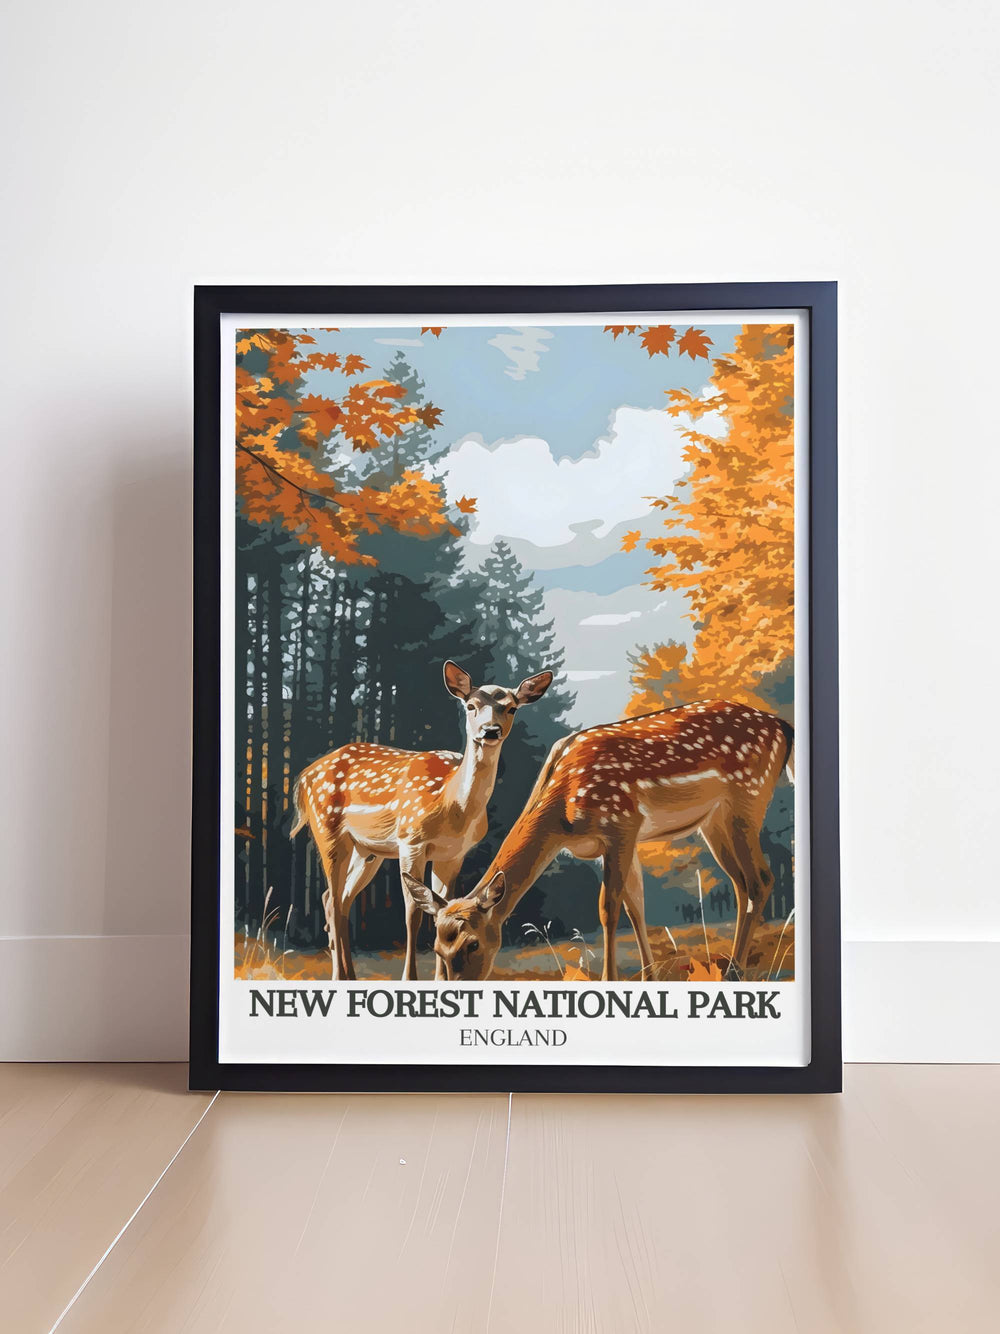 Artistic print of Bolderwood Deer Sanctuary capturing the peaceful deer in their natural habitat.